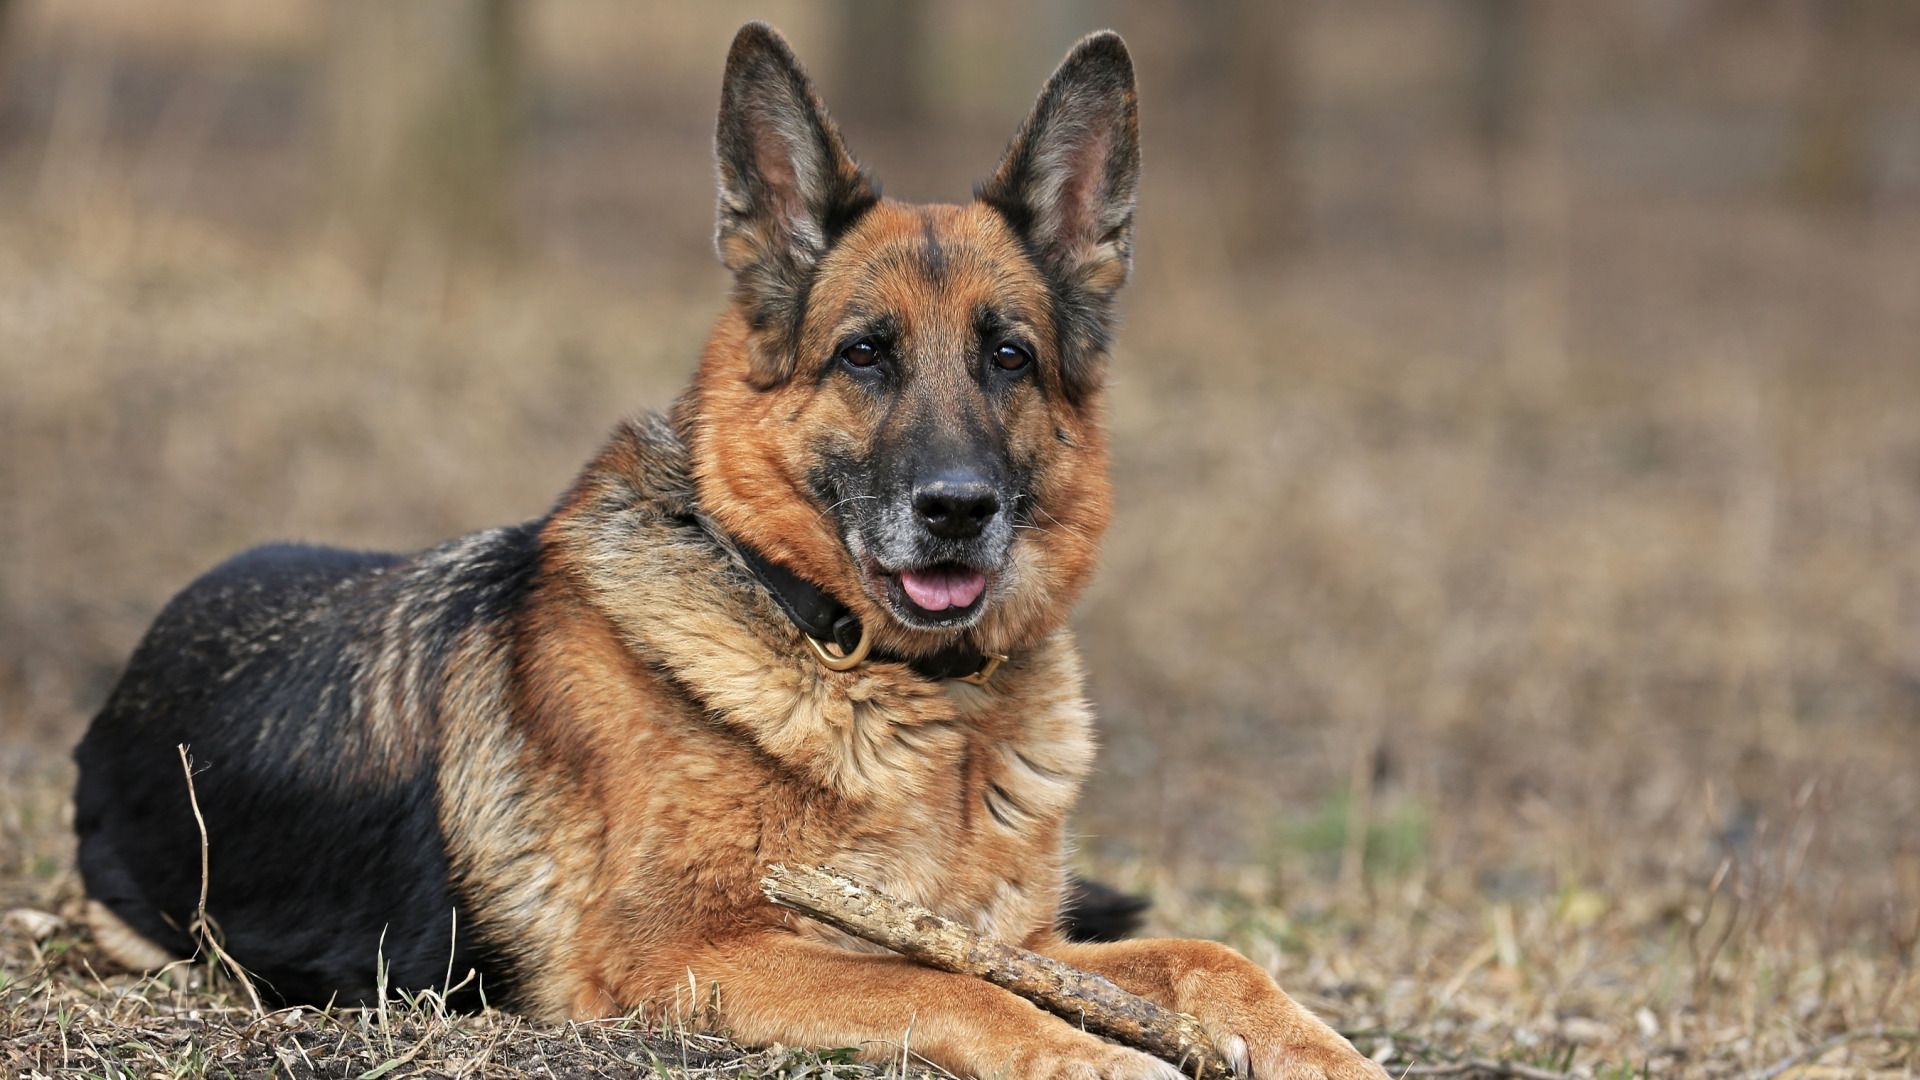 German Shepherd Dog Portrait Photo